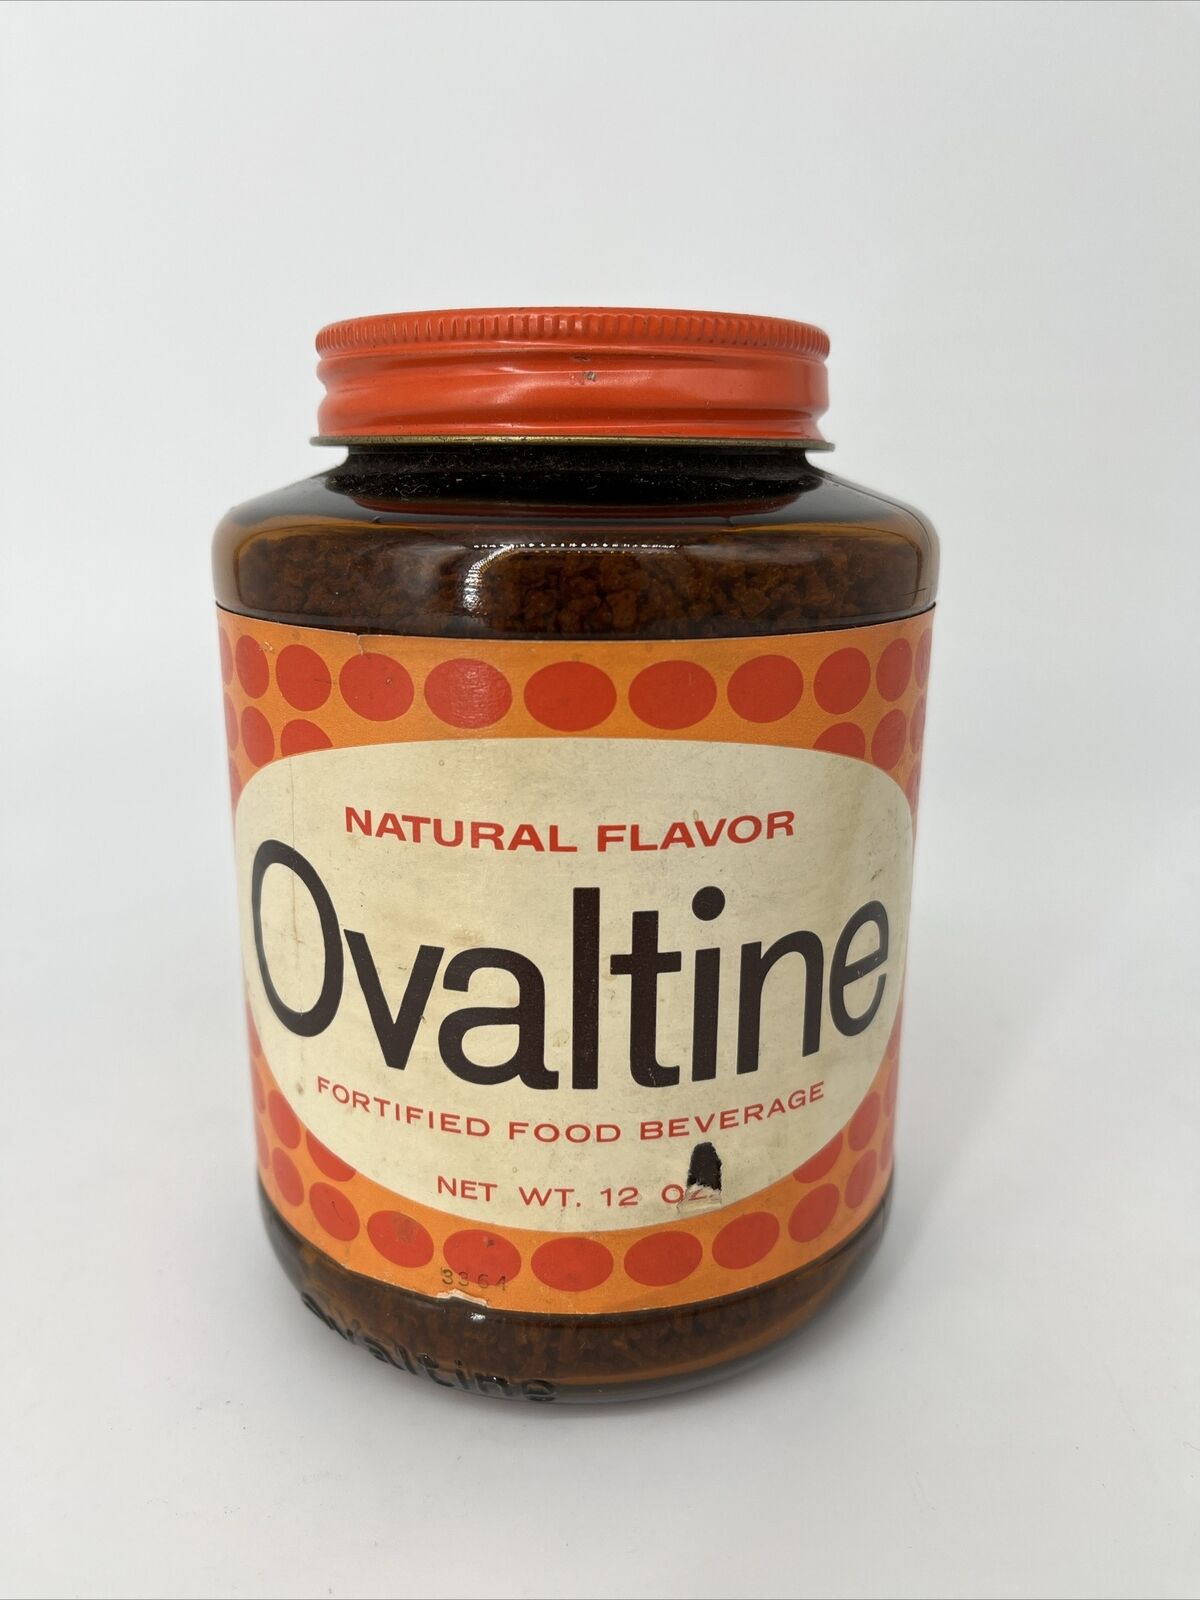 Sealed 1950s Unopened Vintage Jar of Ovaltine